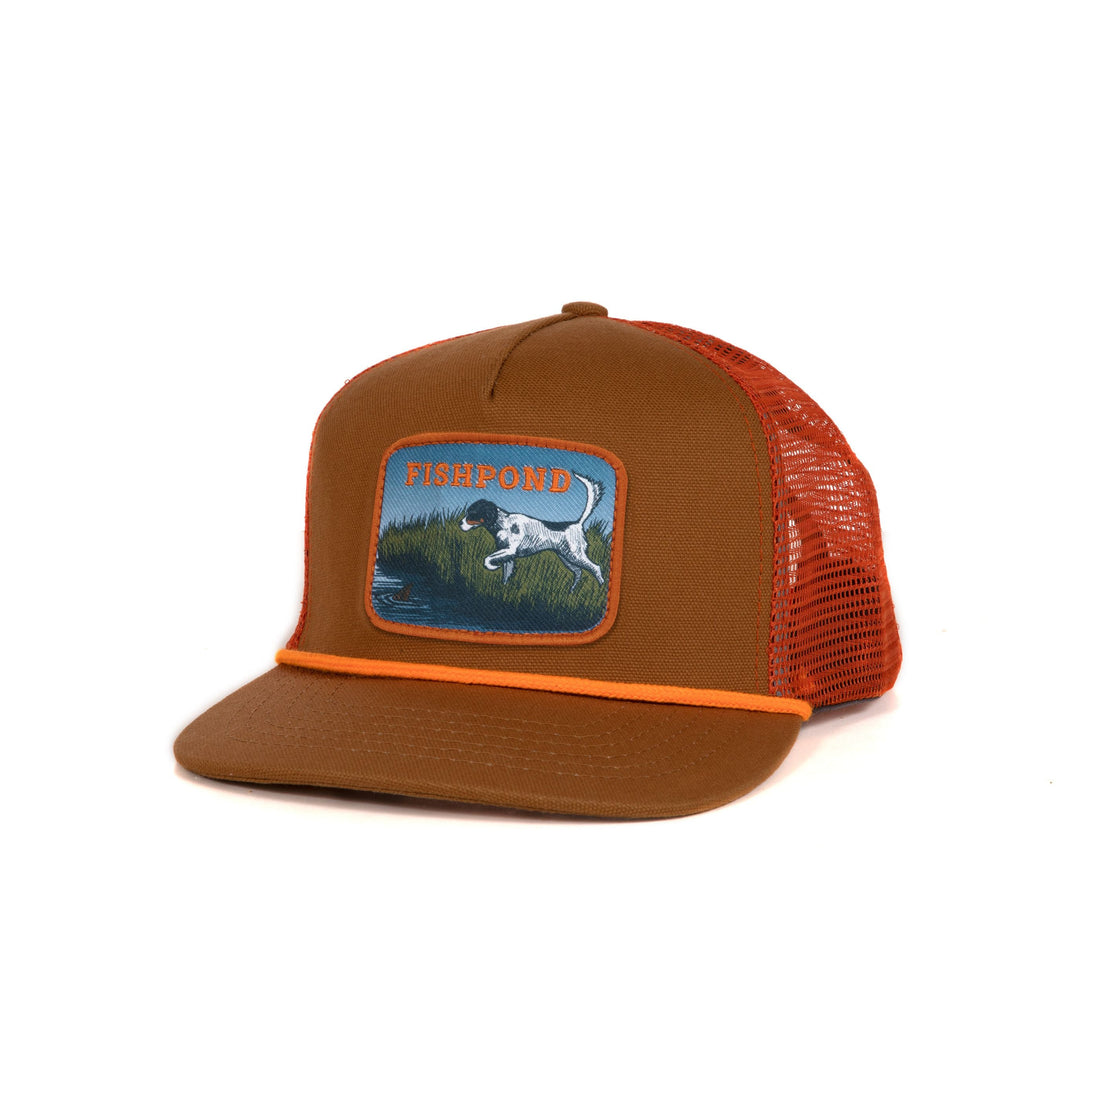 Fishpond - On Point Trucker Hat